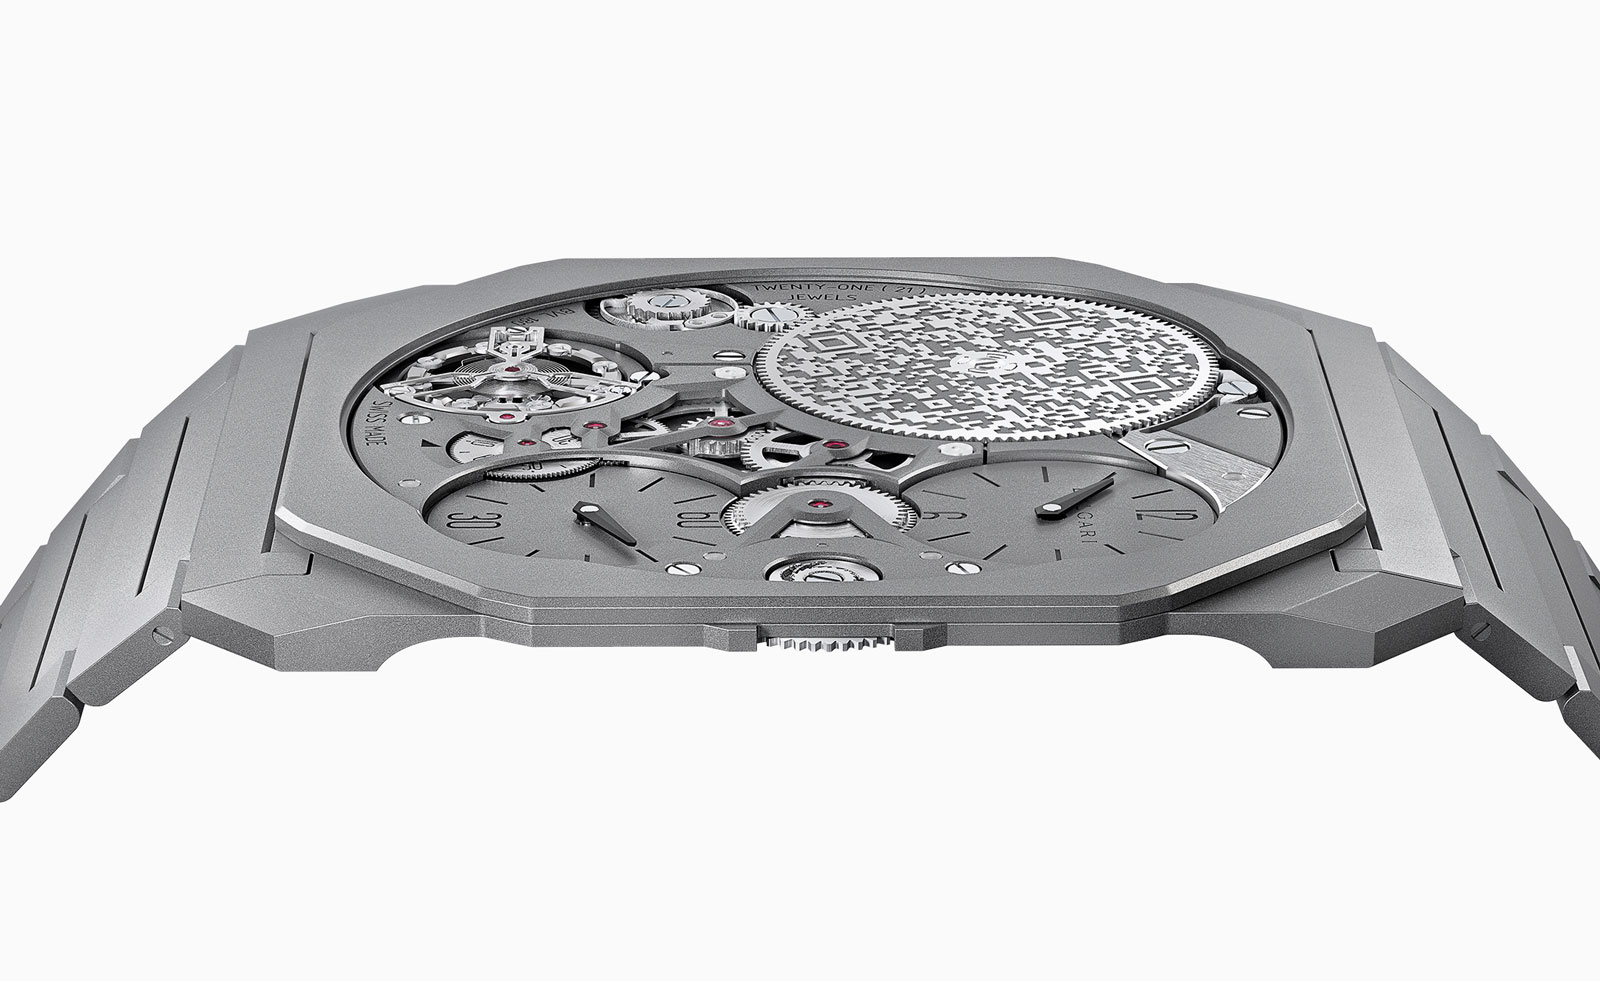 Bulgari Octo Finissimo Ultra is world's thinnest watch | Wallpaper